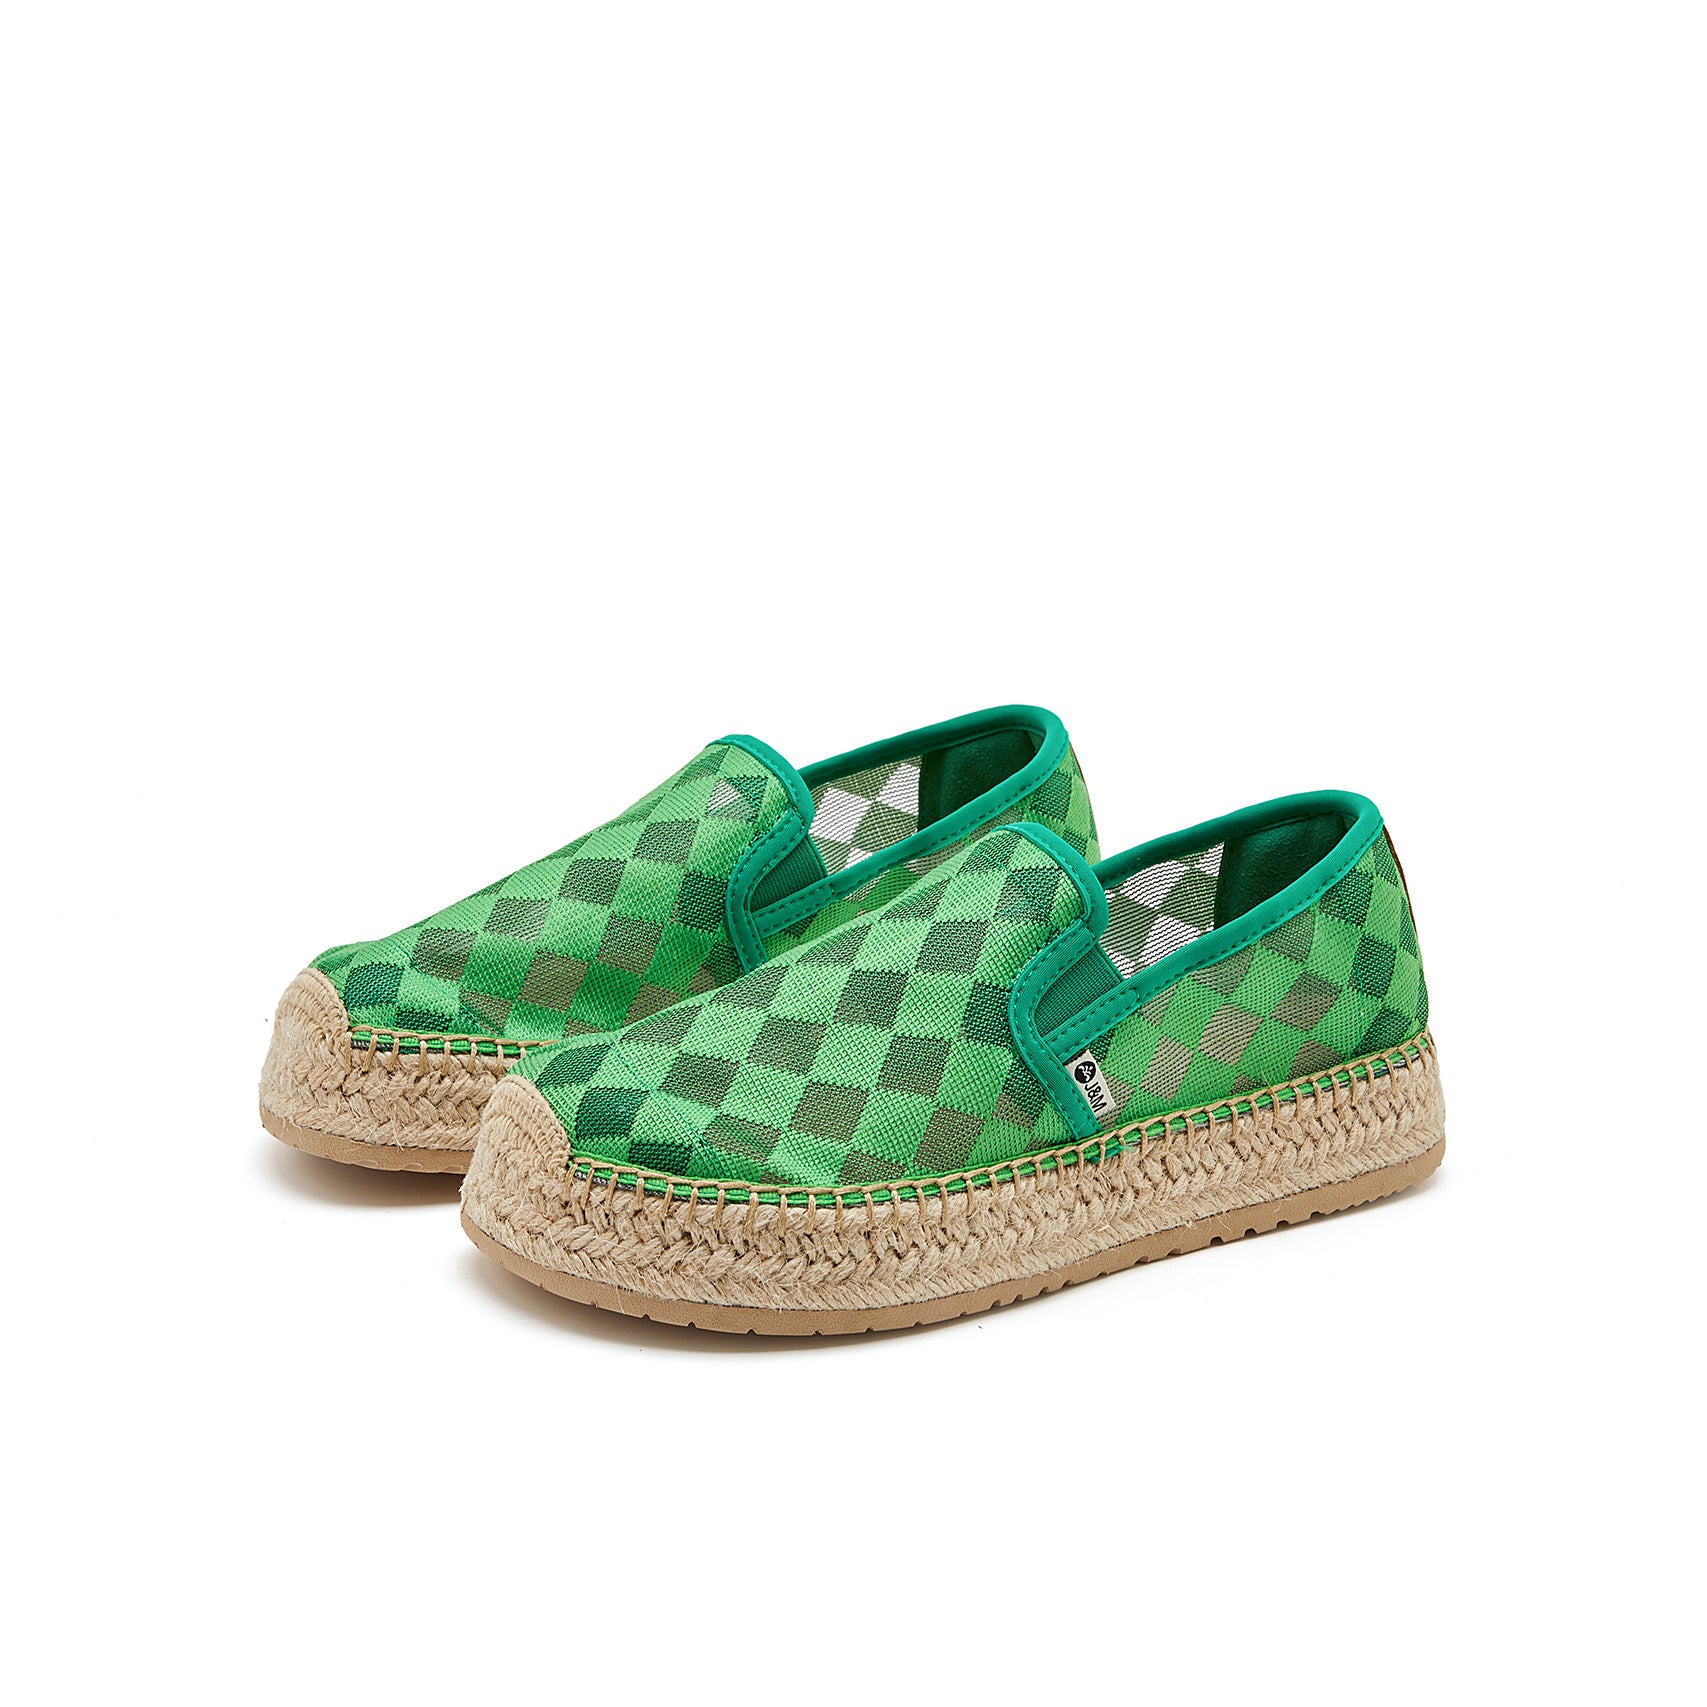 JOY&MARIO Handmade Women’s Slip-On Espadrille Mesh Loafers in Green-05337W